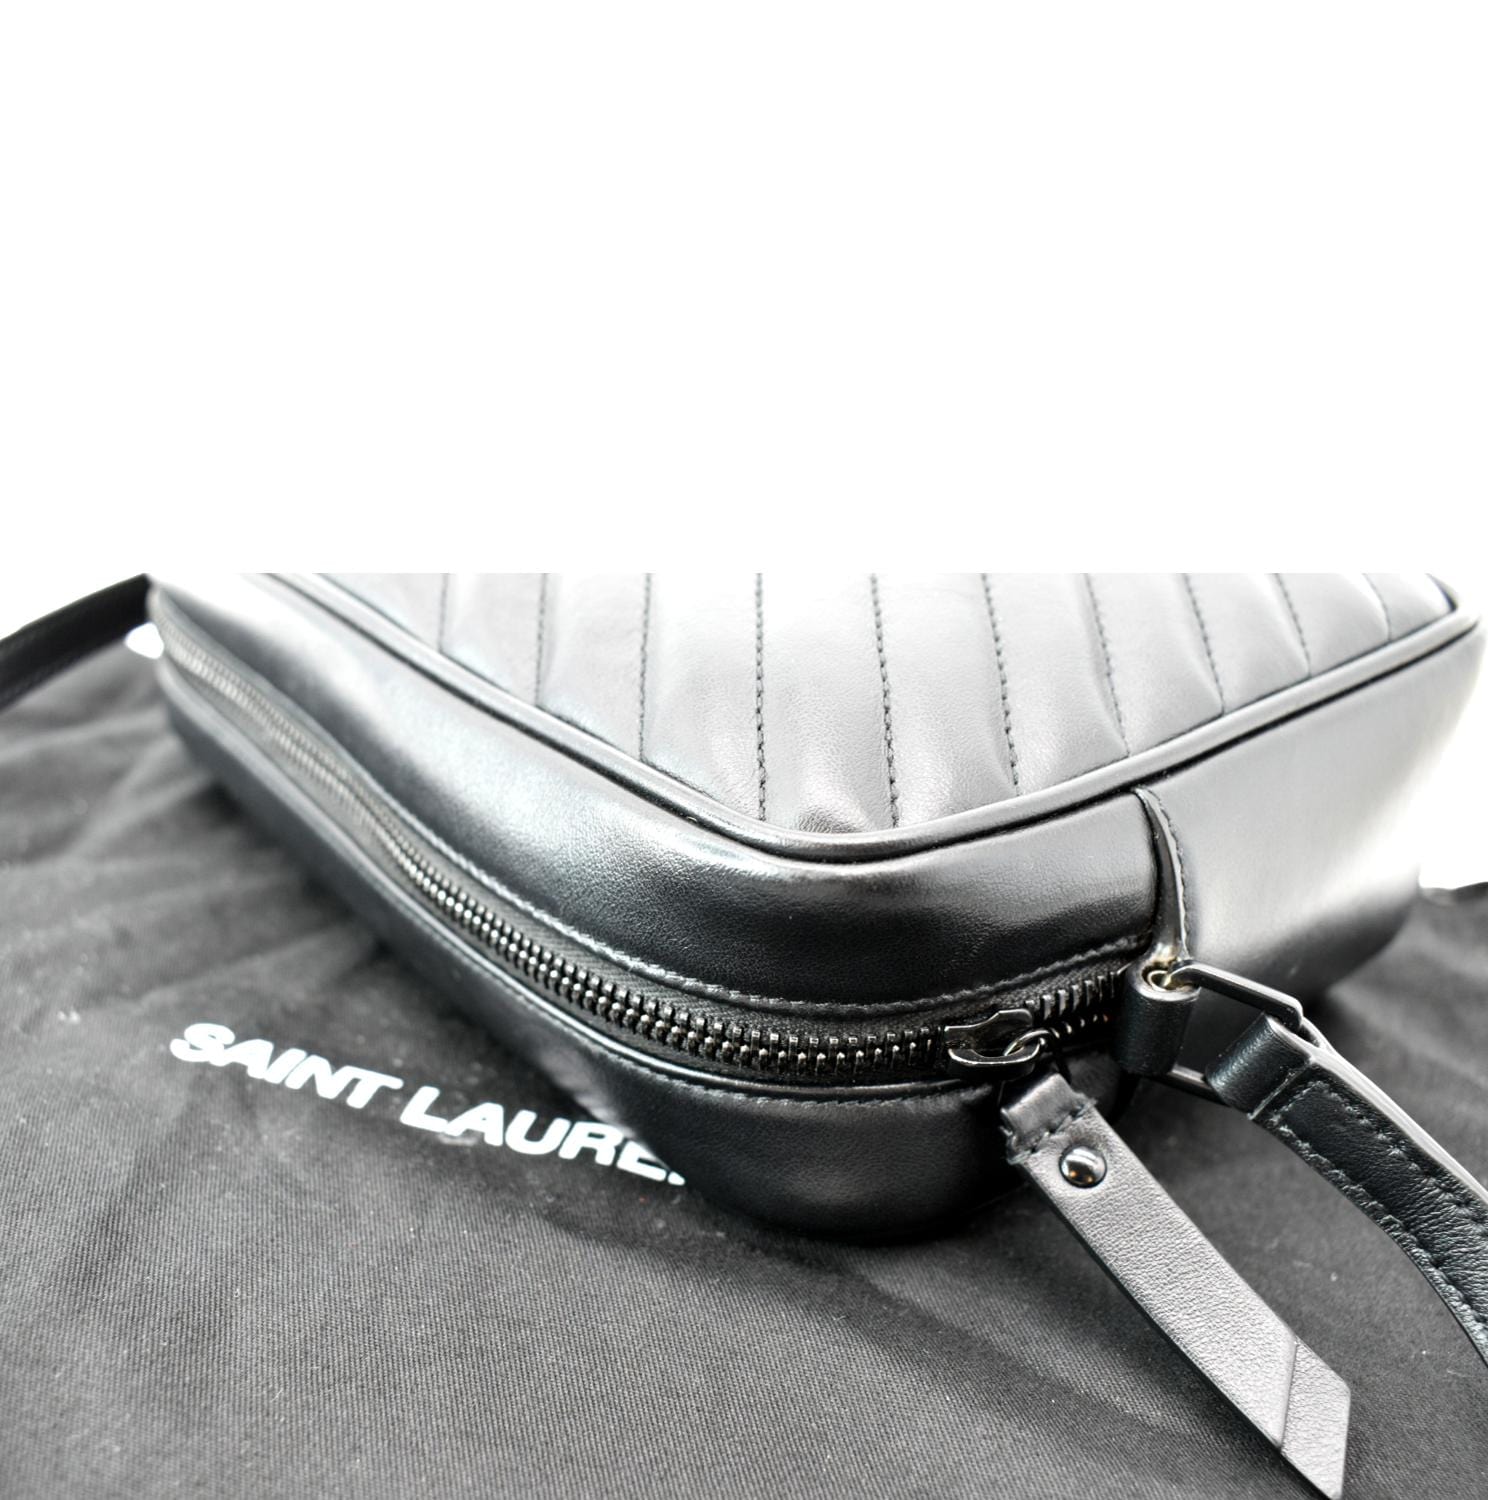 Yves Saint Laurent Lou Chevron Leather Camera Crossbody Bag